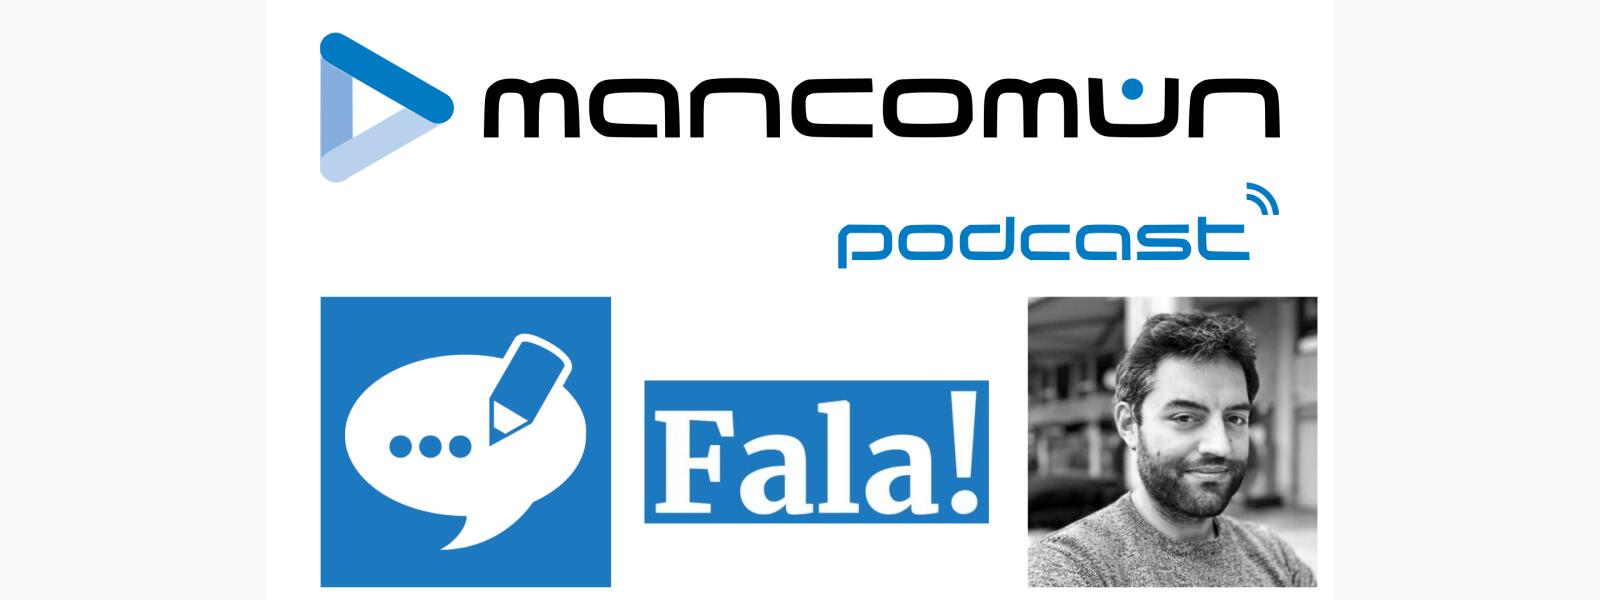 Mancomún Podcast: WordPress y fala.gal con Anxo Sánchez